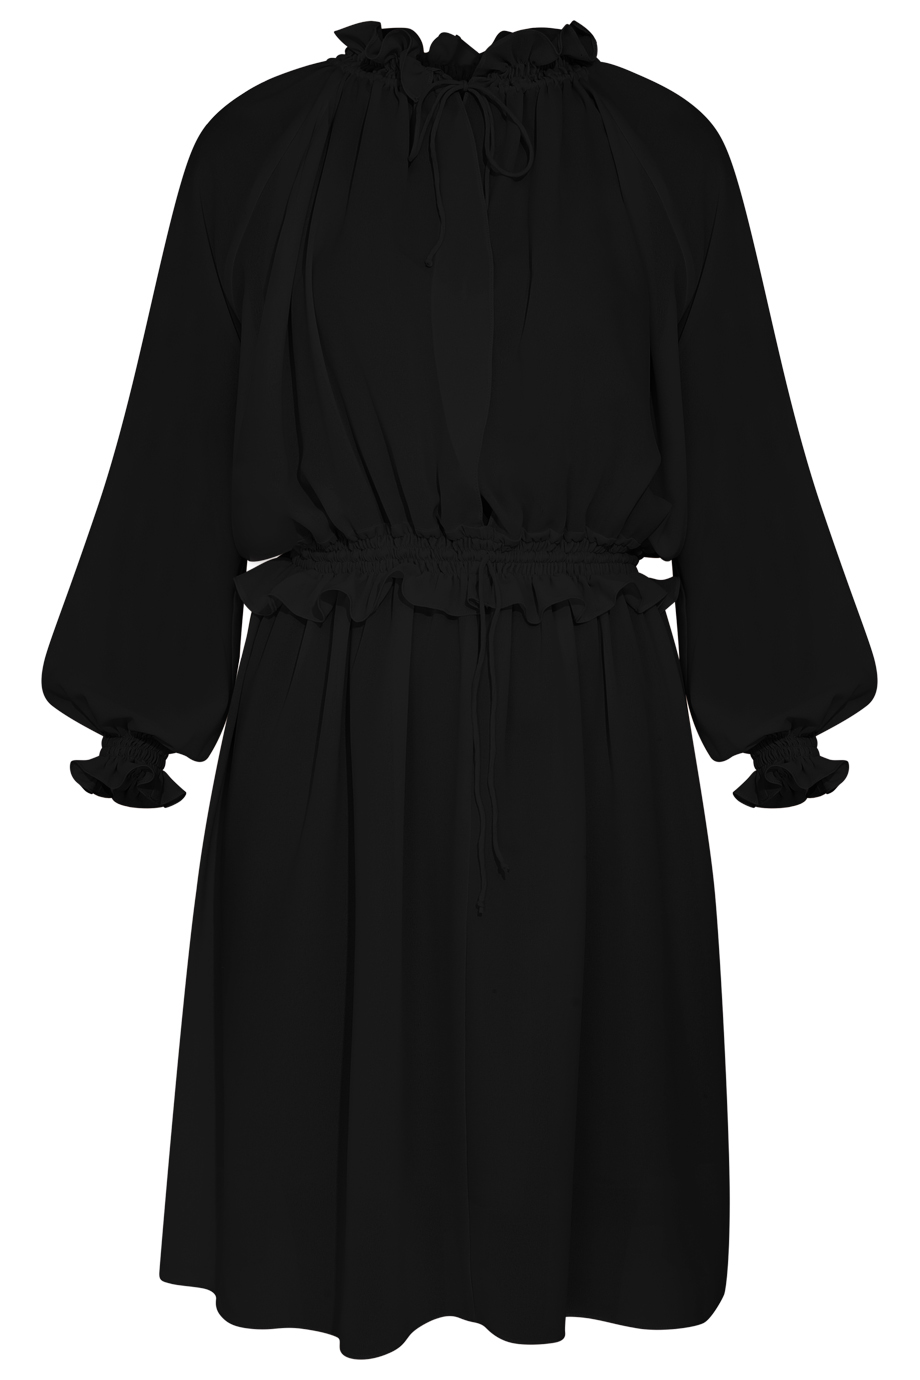 Đầm dài tay Estrella Waisted Dress/ Black